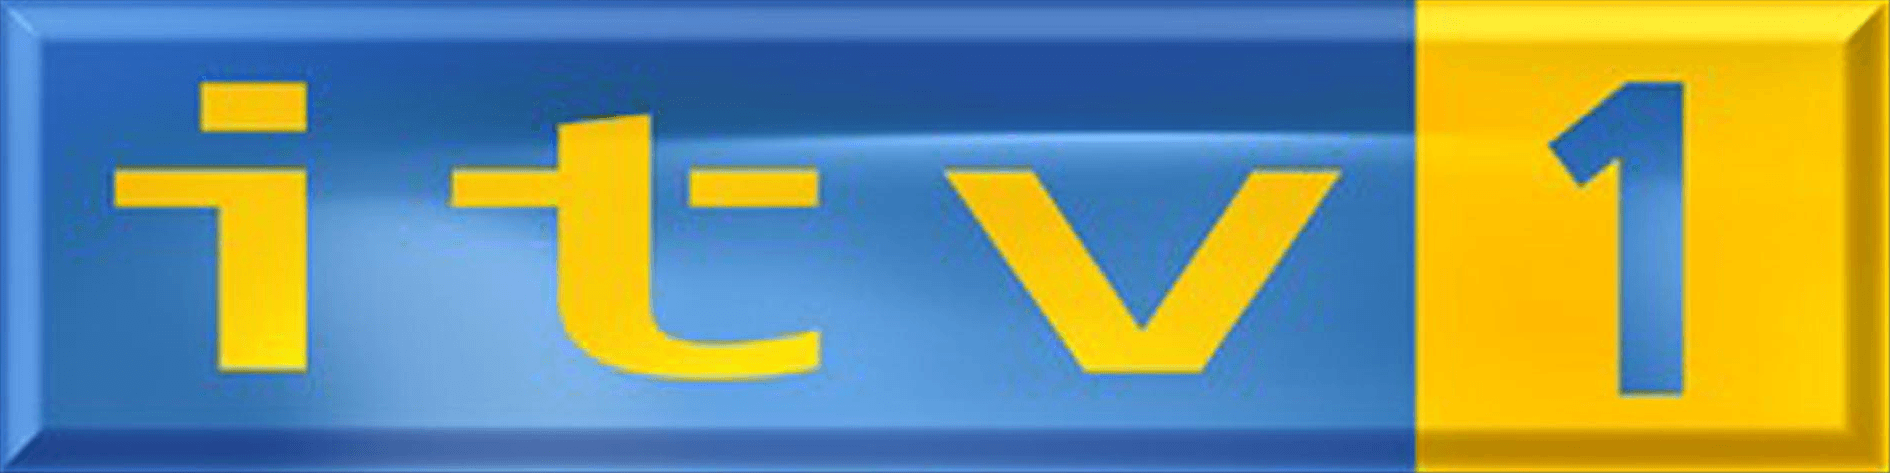 ITV Logo - ITV (UK) | Logopedia | FANDOM powered by Wikia